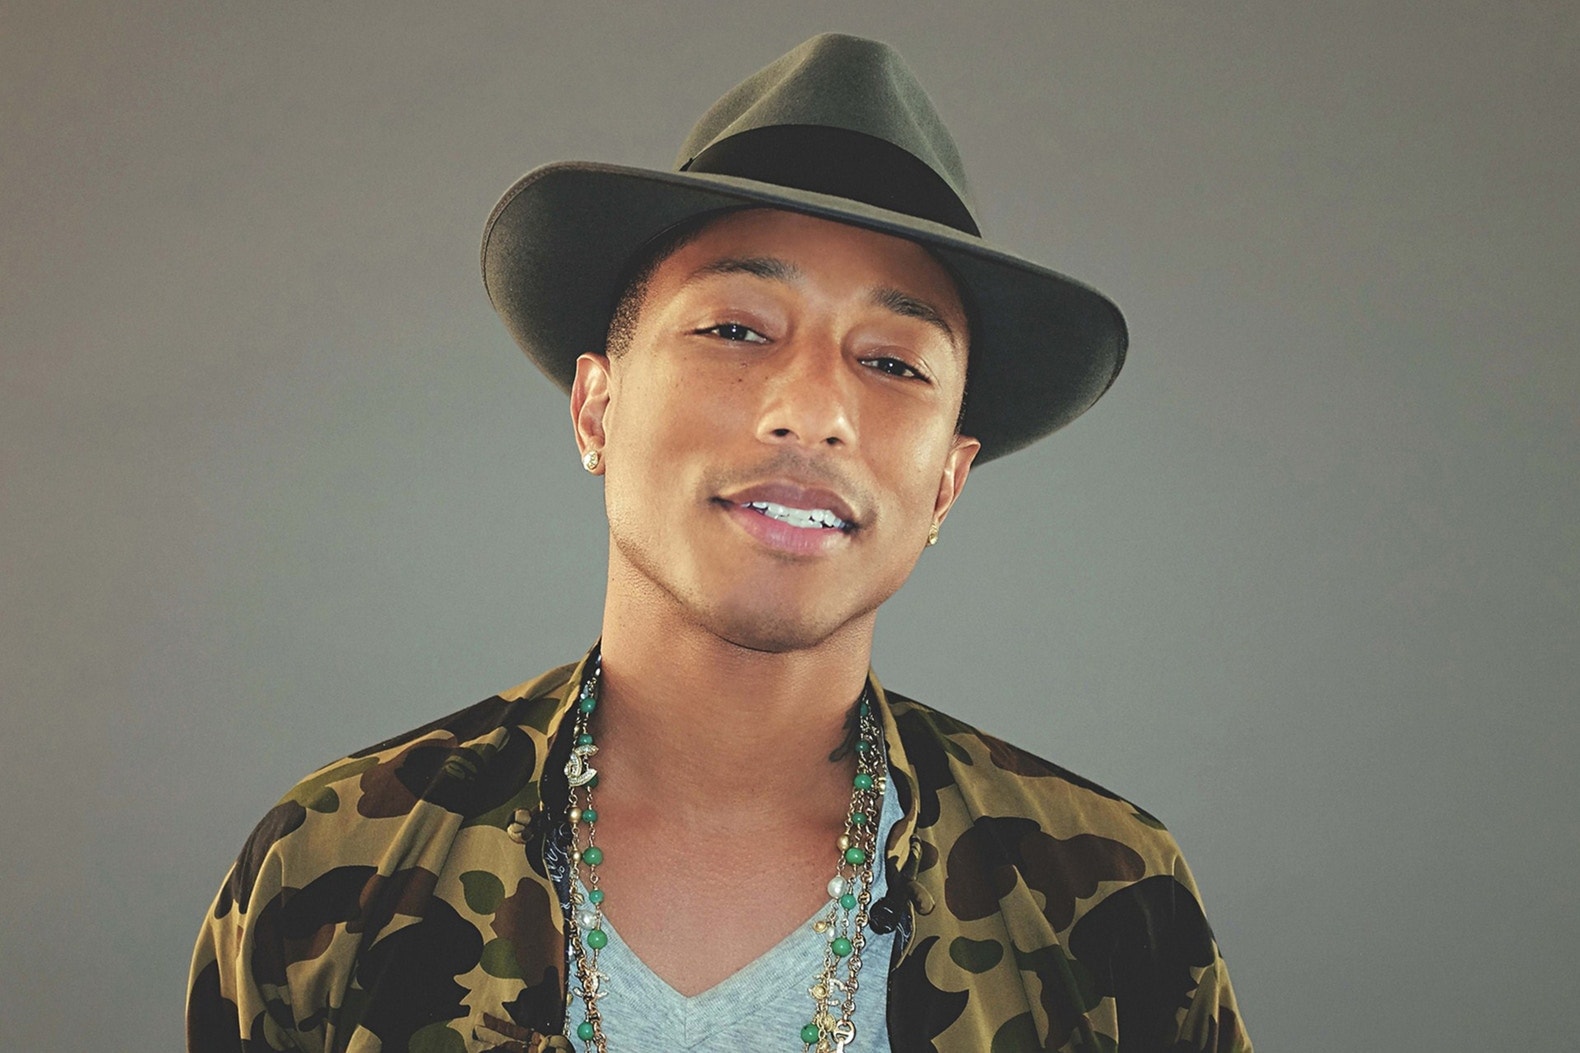 Pharrell 接受《華爾街日報》專訪談及對舊衣物的看法和喜愛的女明星